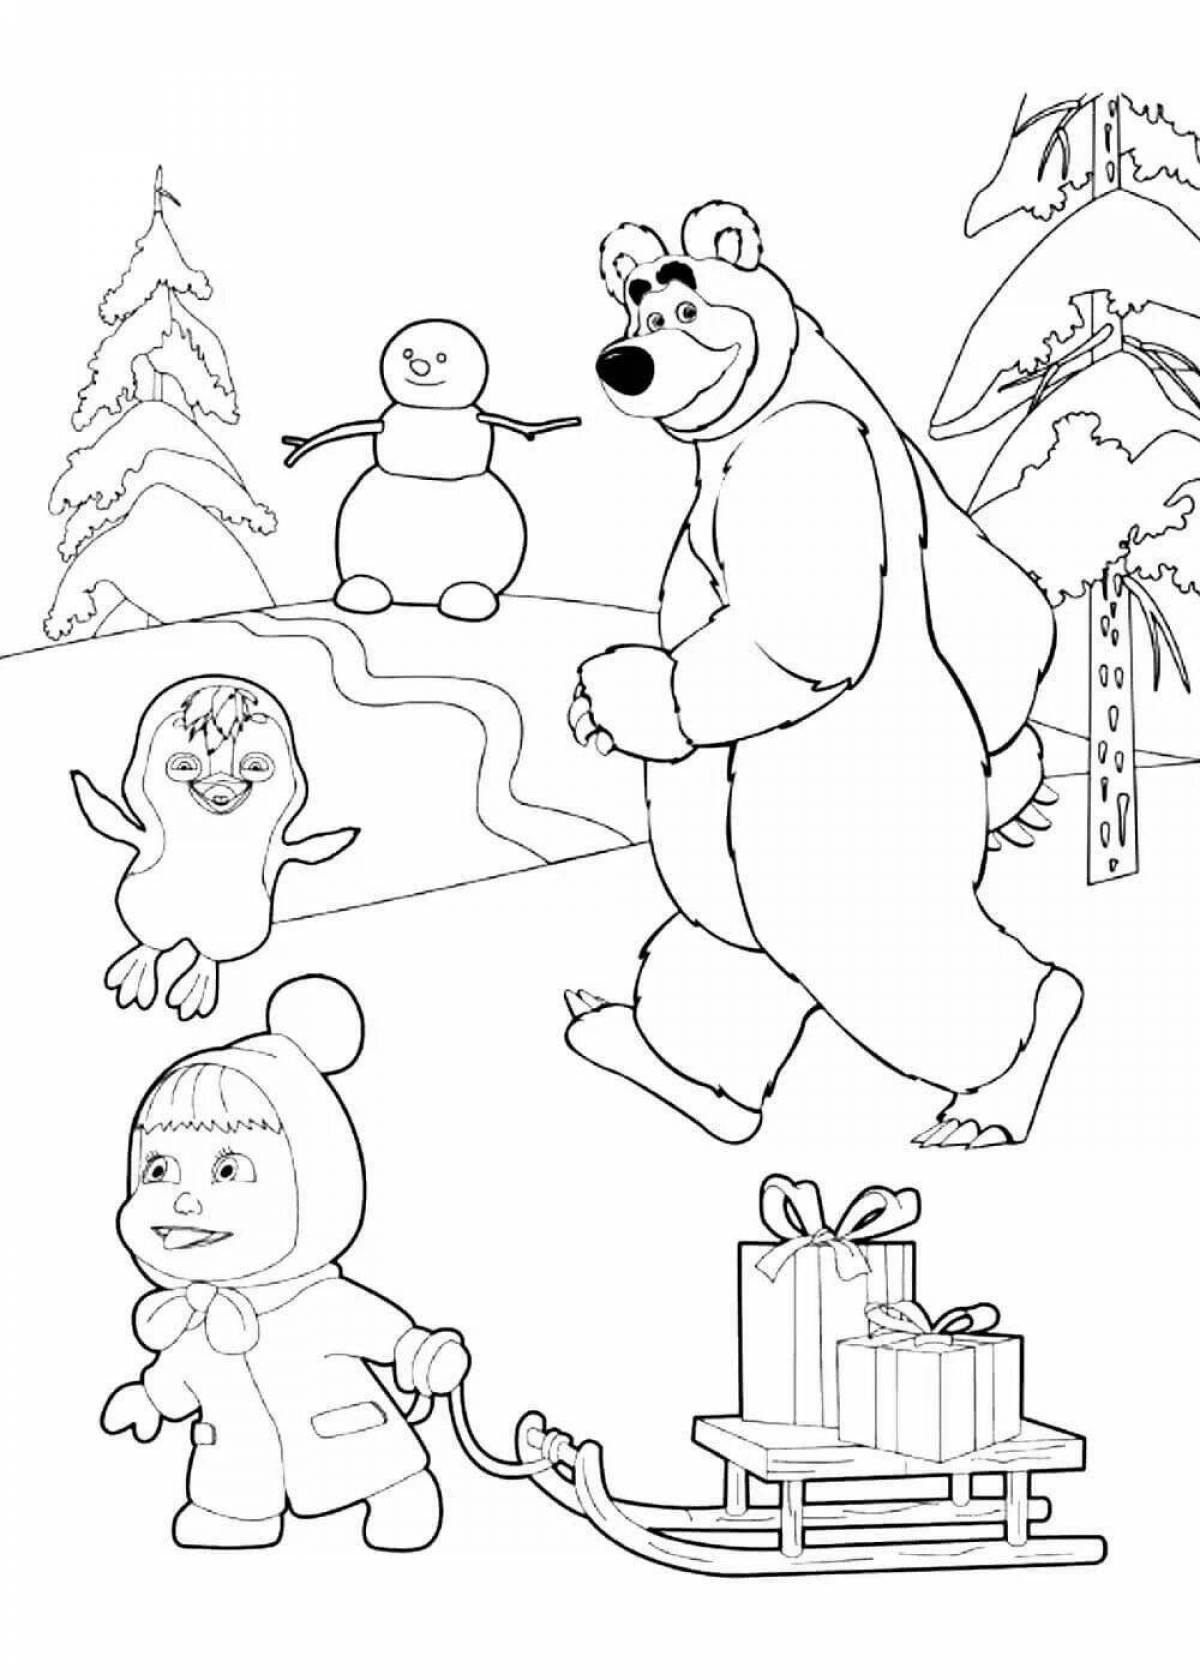 Cute masha and the bear coloring book